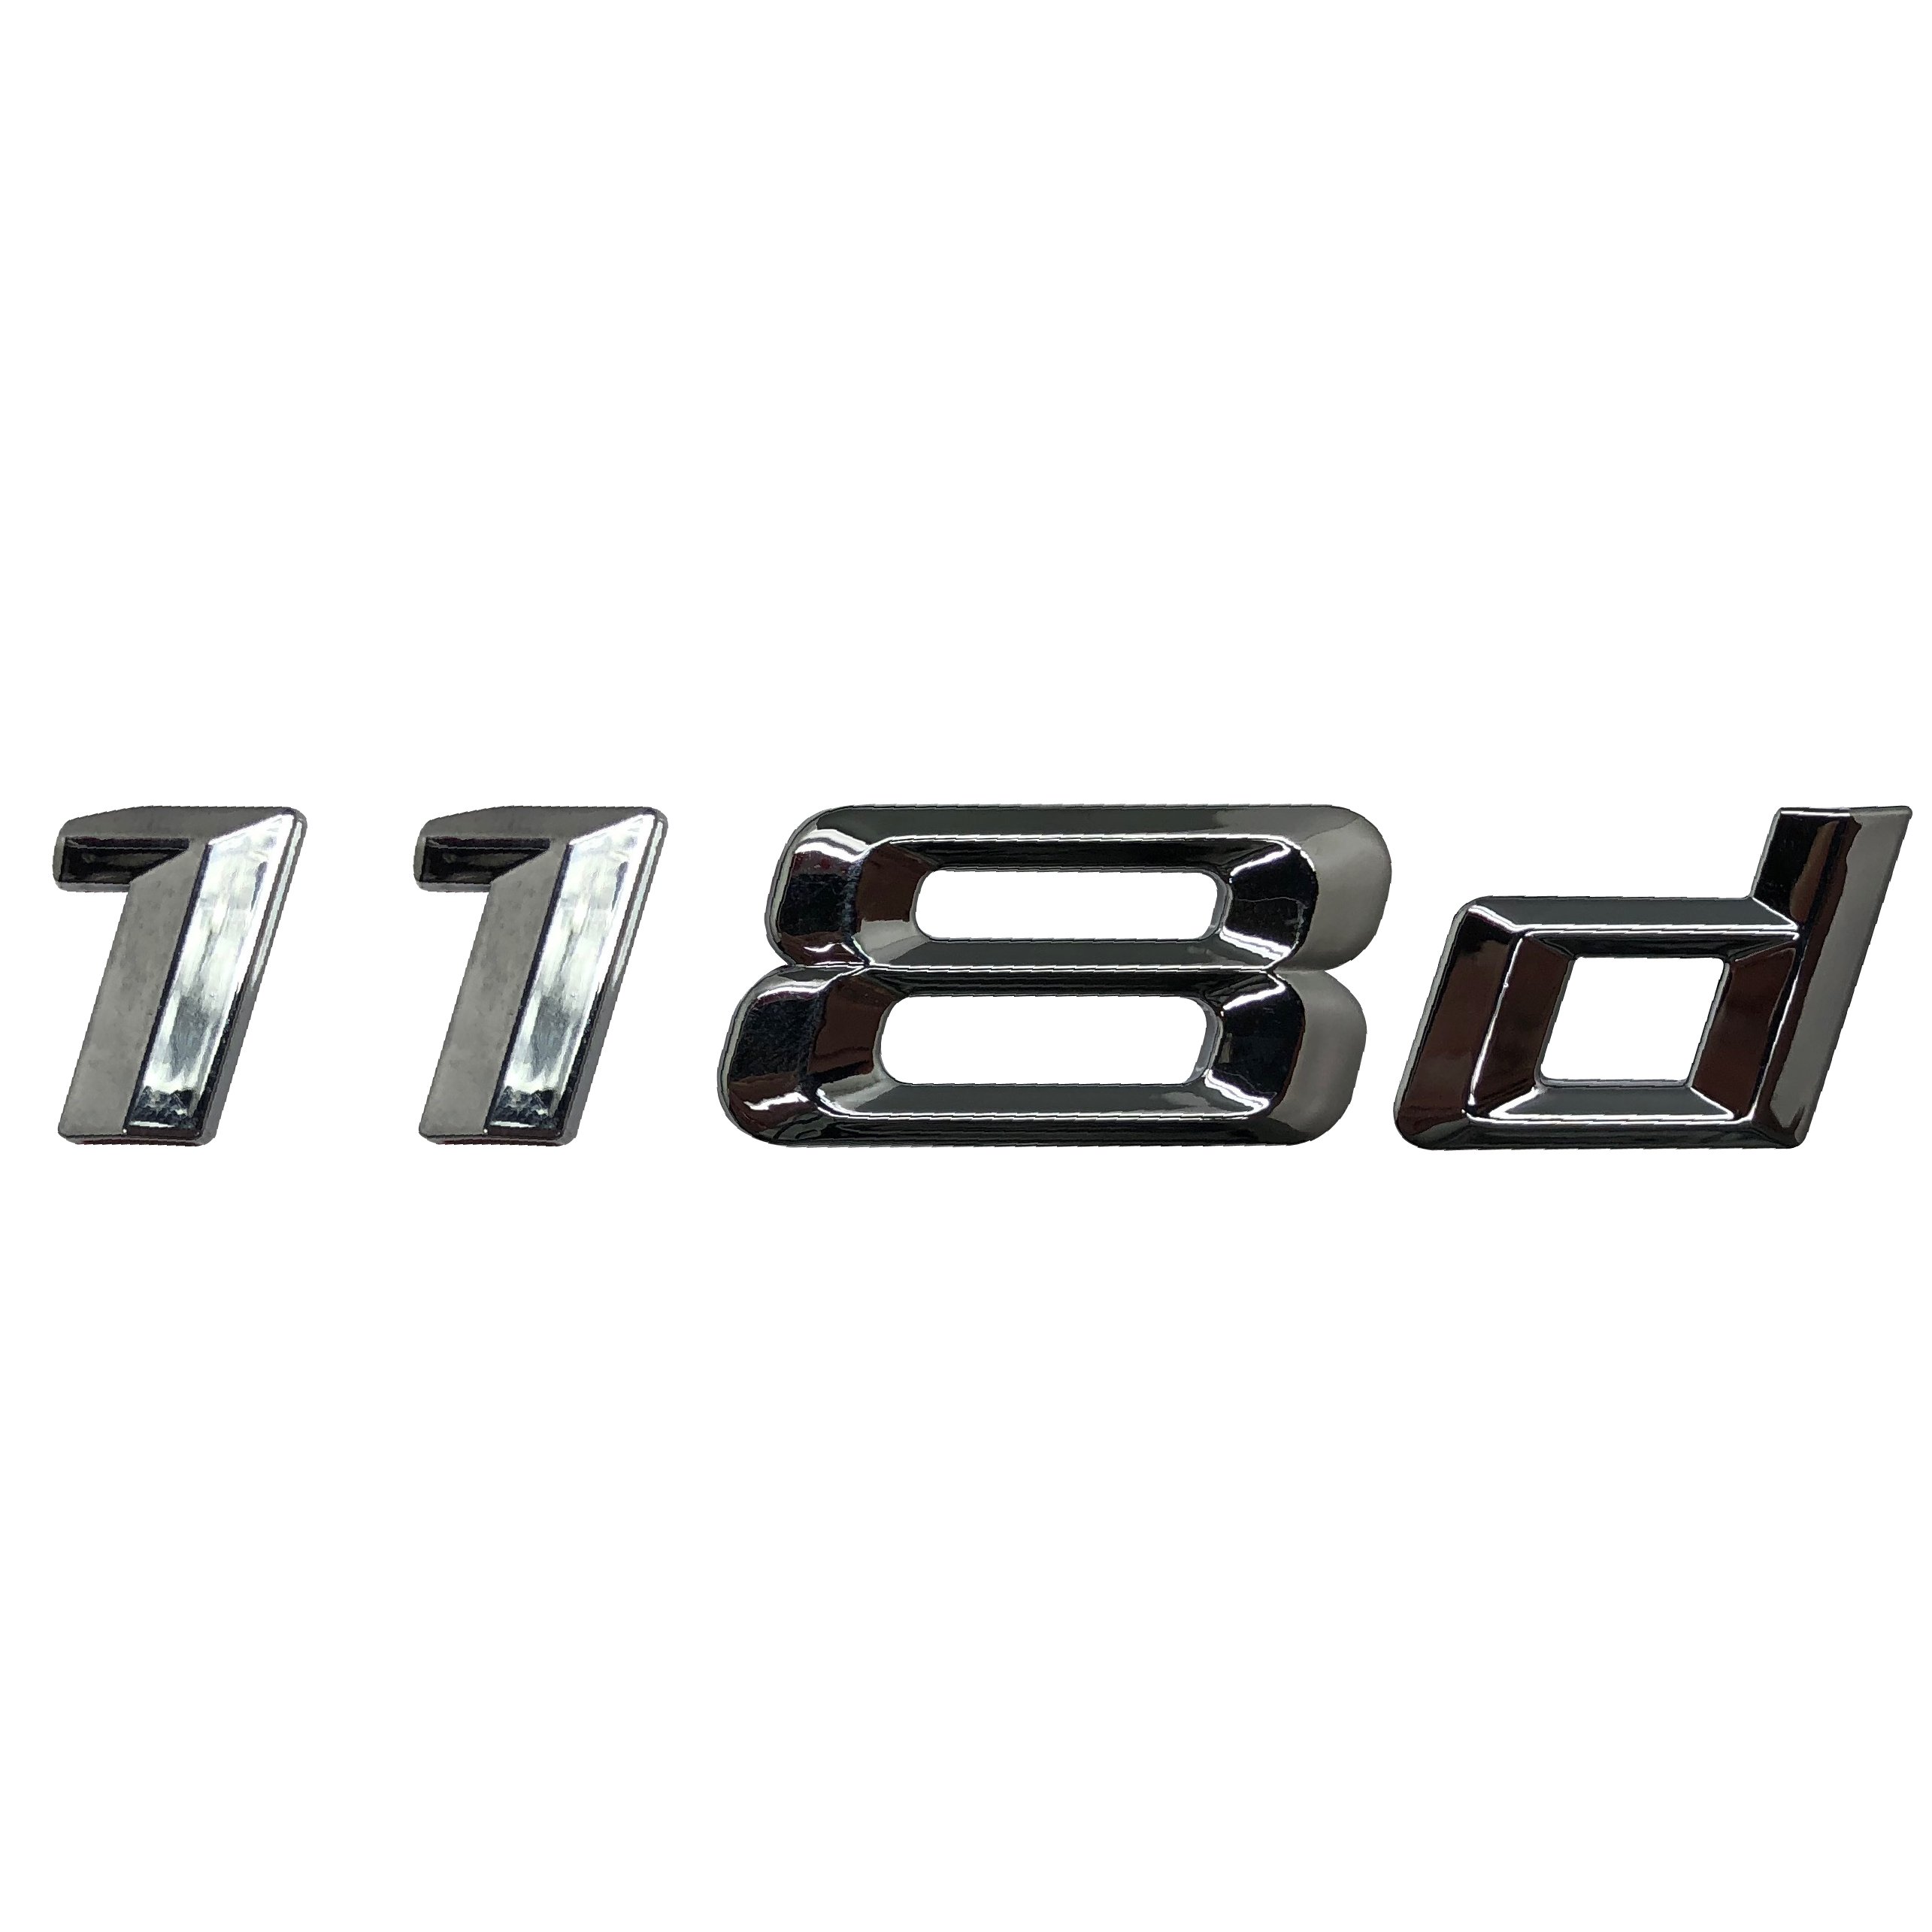 Silver Chrome BMW 118d Rear Boot Badge Emblem Number Letter For 1 Series E81 E82 E87 E88